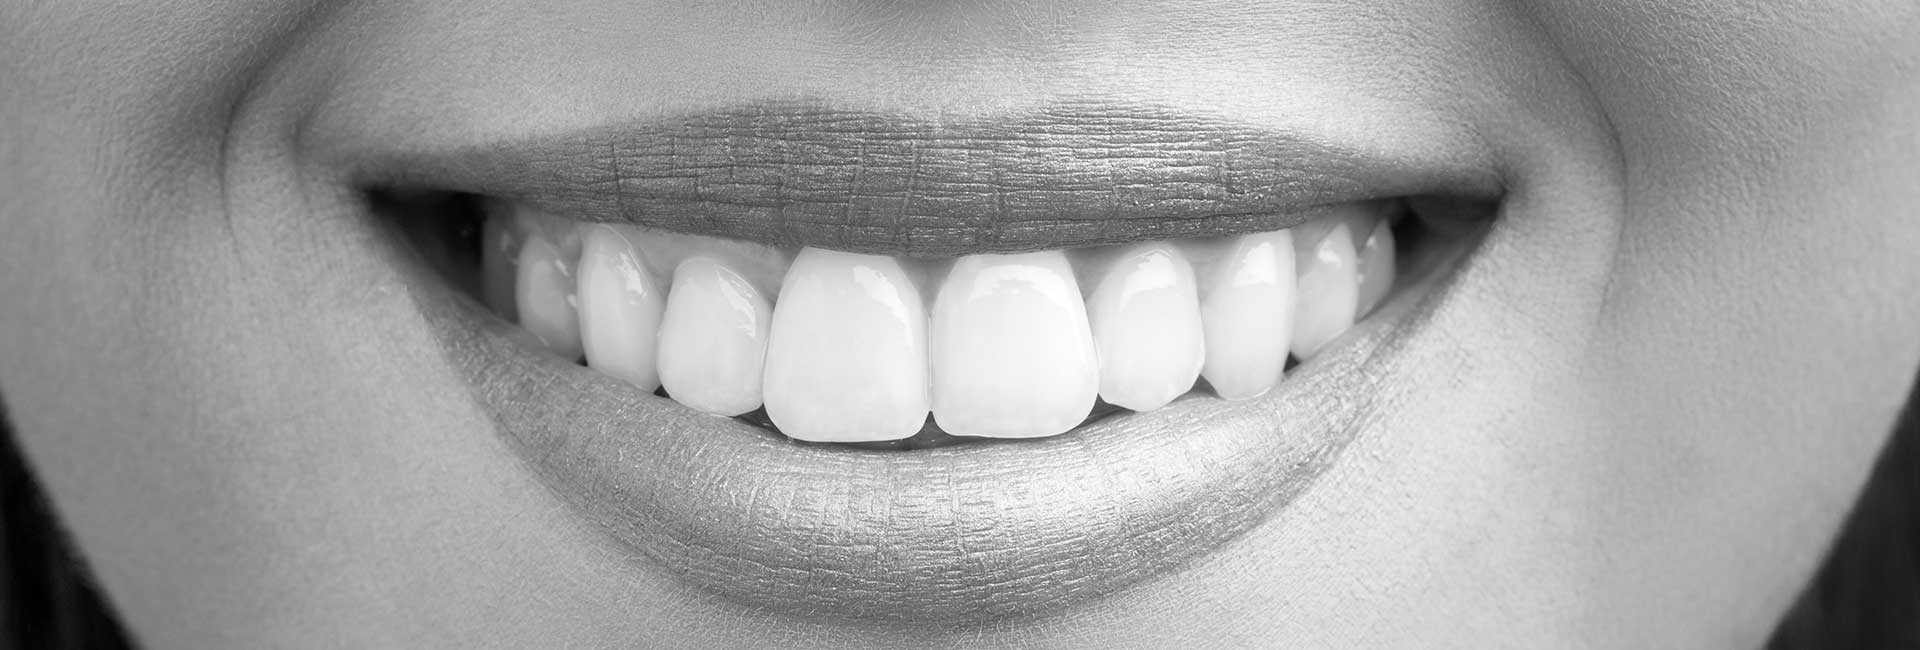 Beauty woman look her beautiful teeth